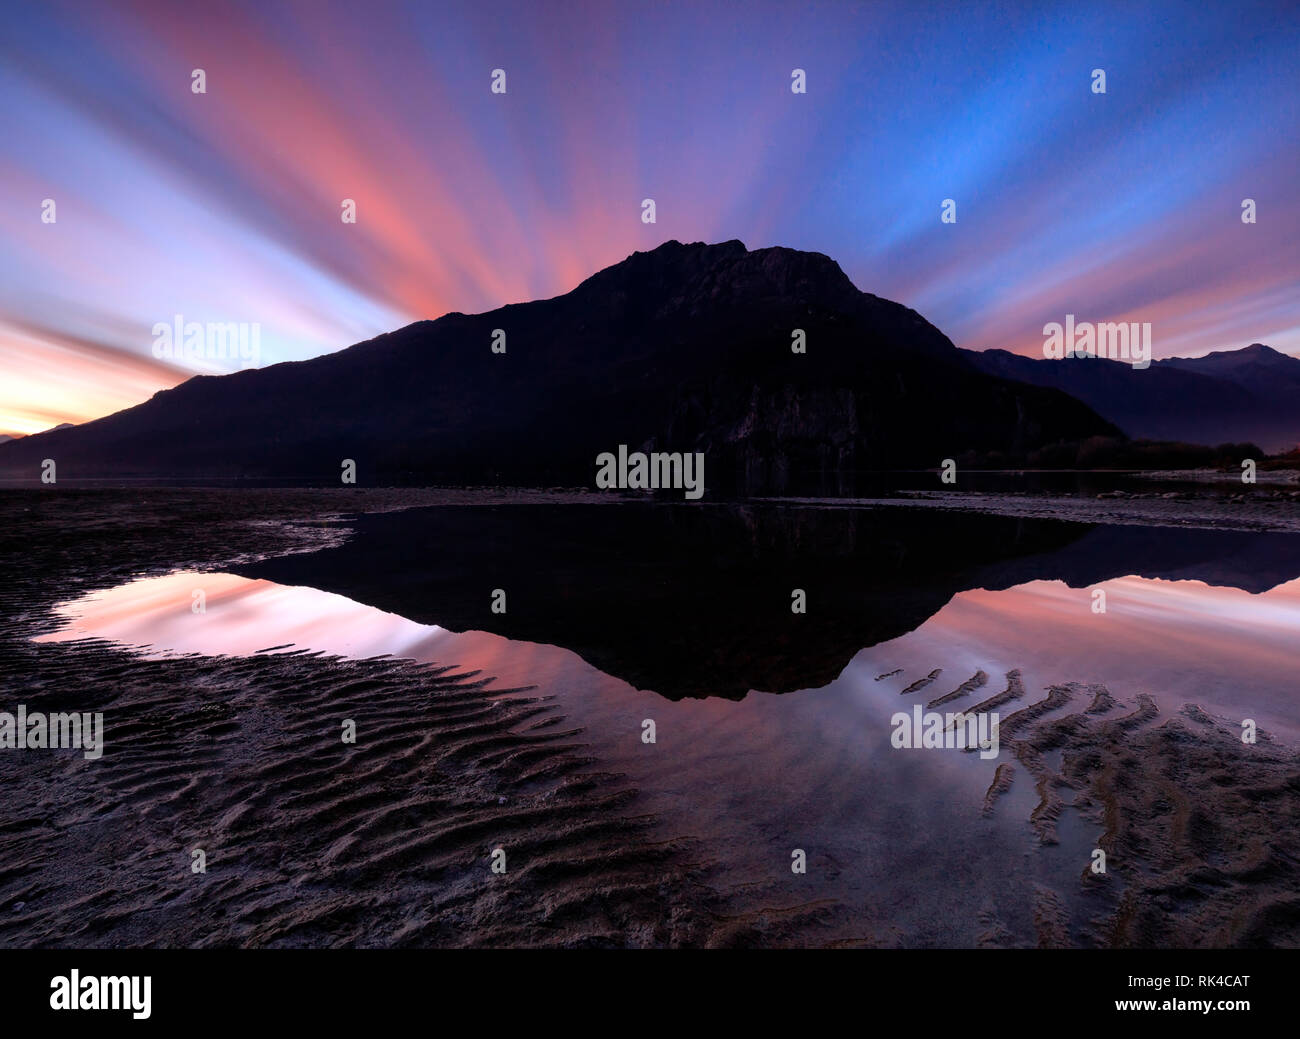 Sunset clouds mirroring in water, Novate Mezzola, Chiavenna Valley, Sondrio province, Valtellina, Lombardy, Italy Stock Photo